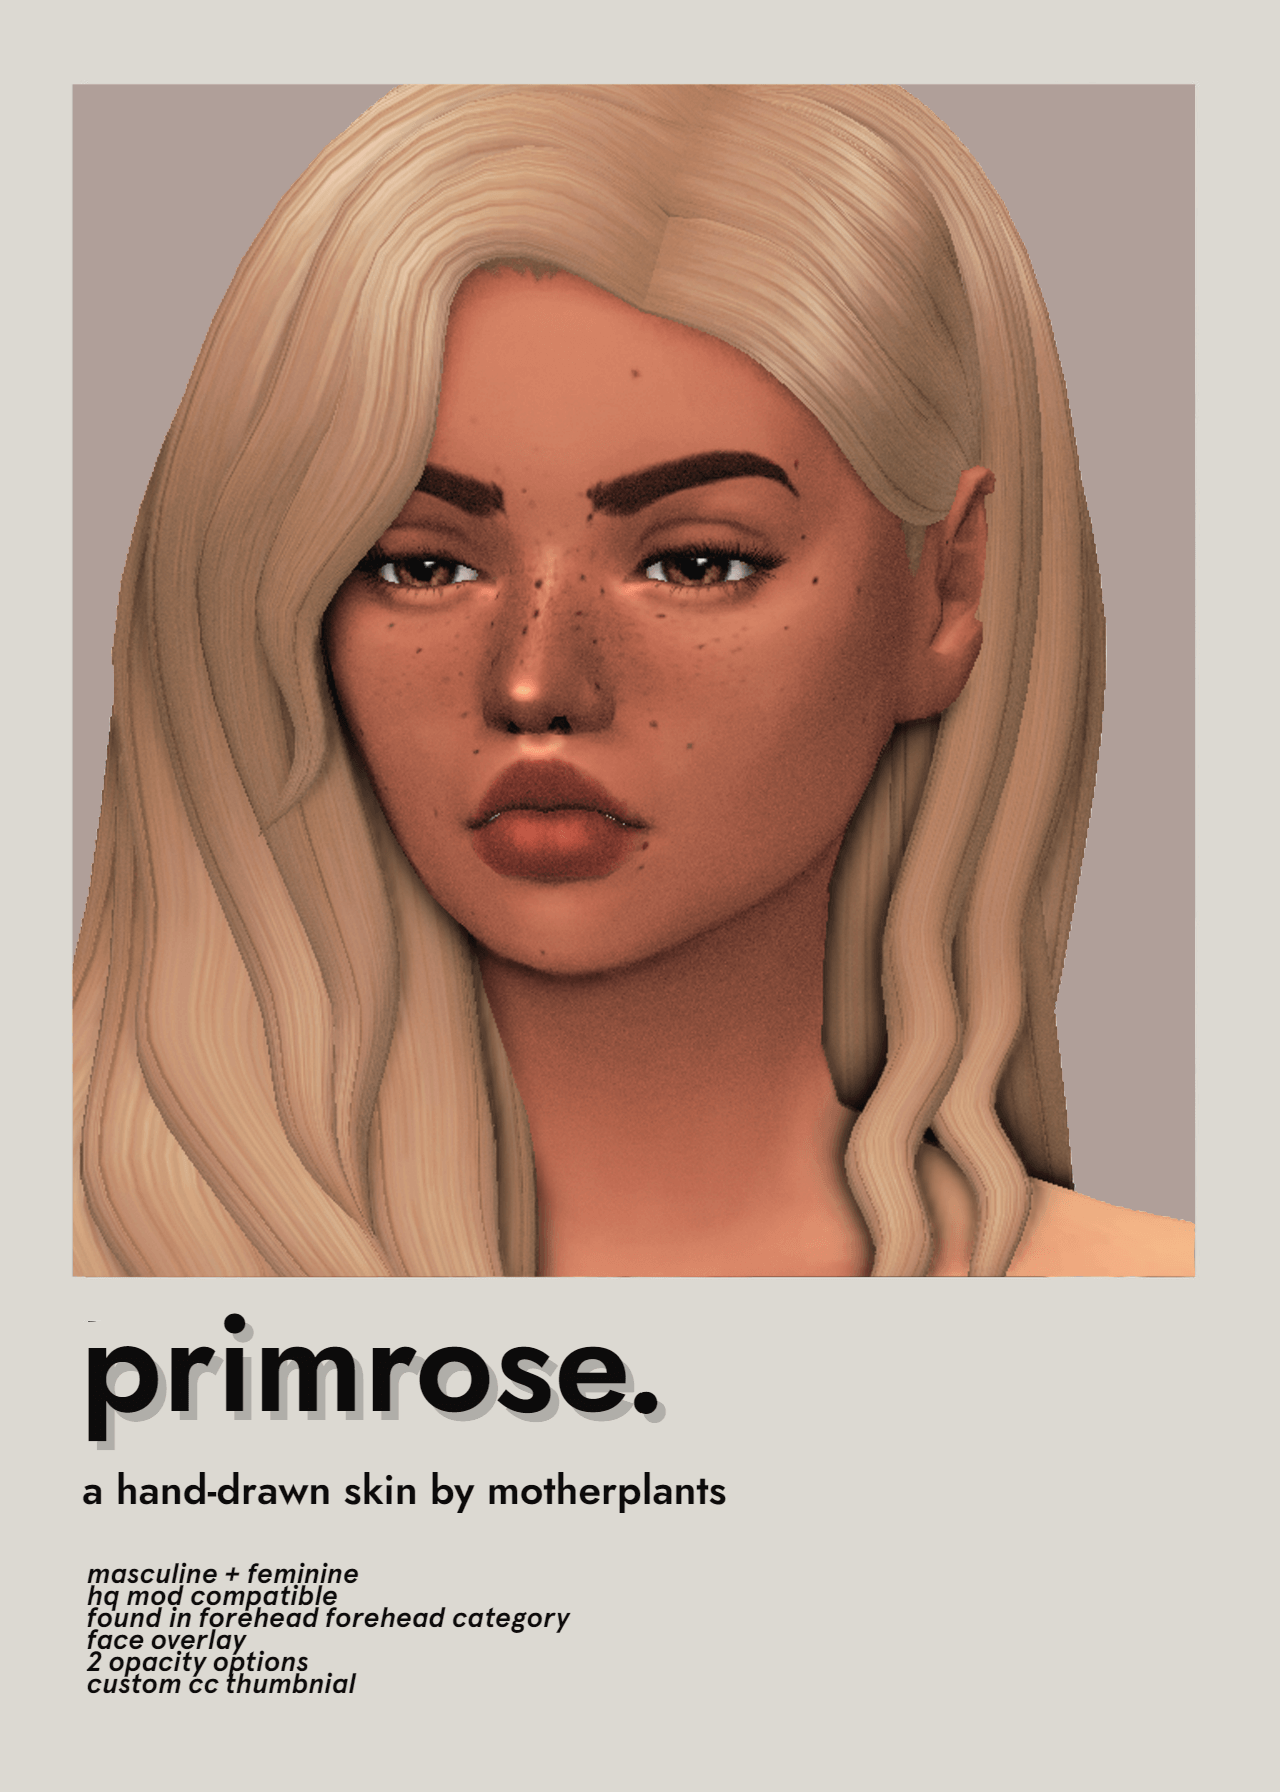 The Sims 4 Primrose Skin Overlay Best Mods Book Vrogue